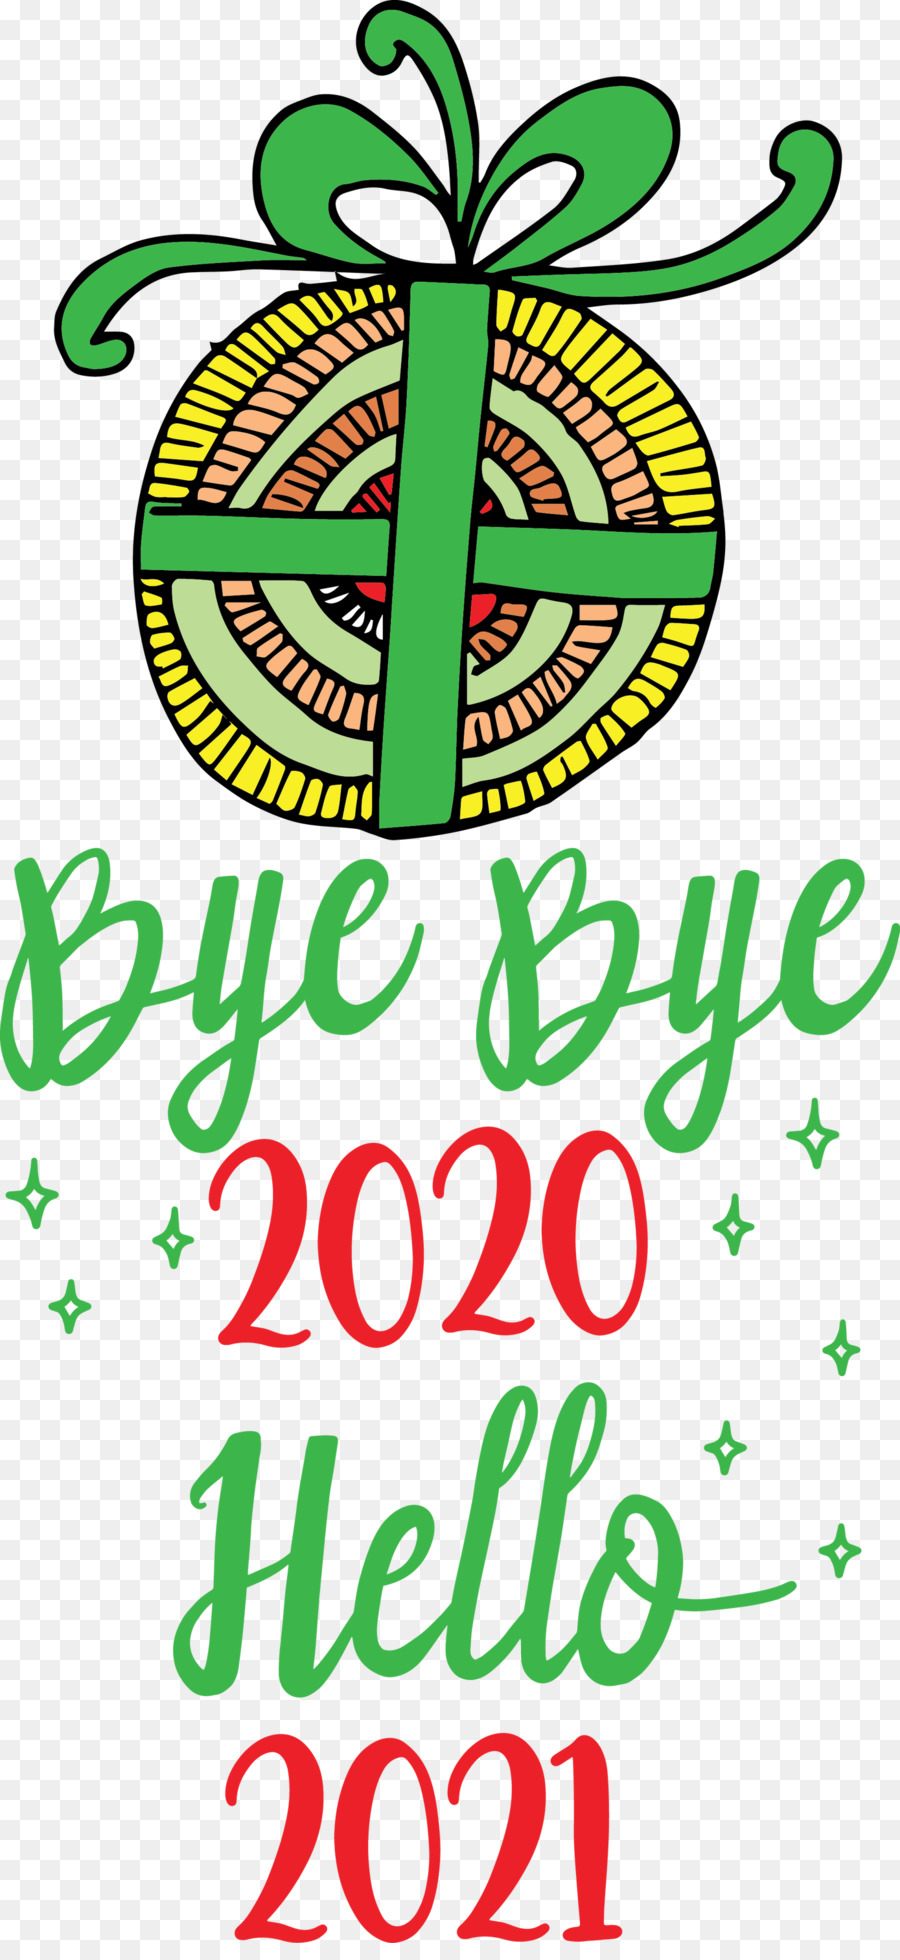 Hallo 2021 Jahr Tschüss 2020 Jahr - 